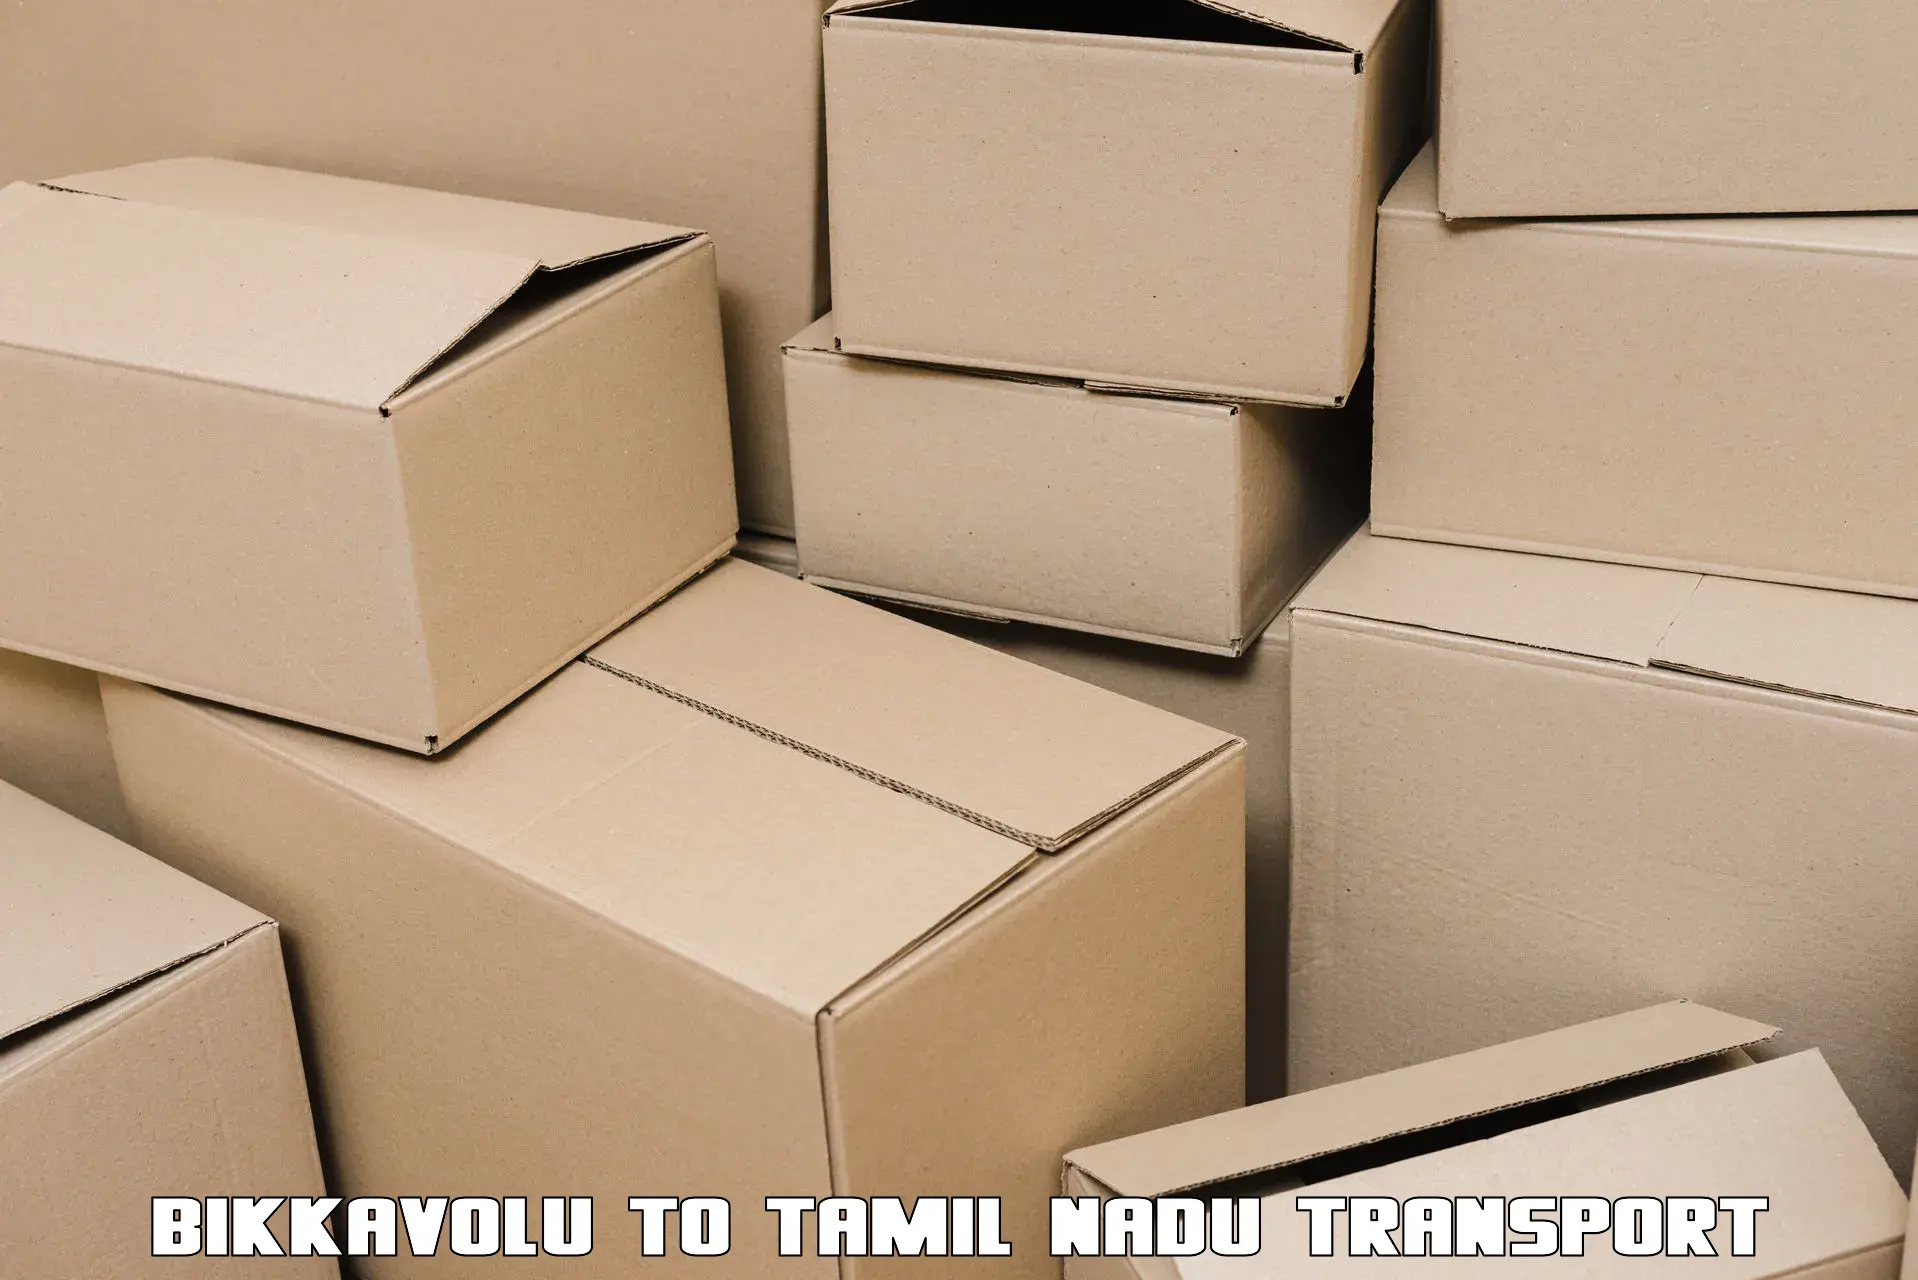 Vehicle transport services Bikkavolu to Tamil Nadu